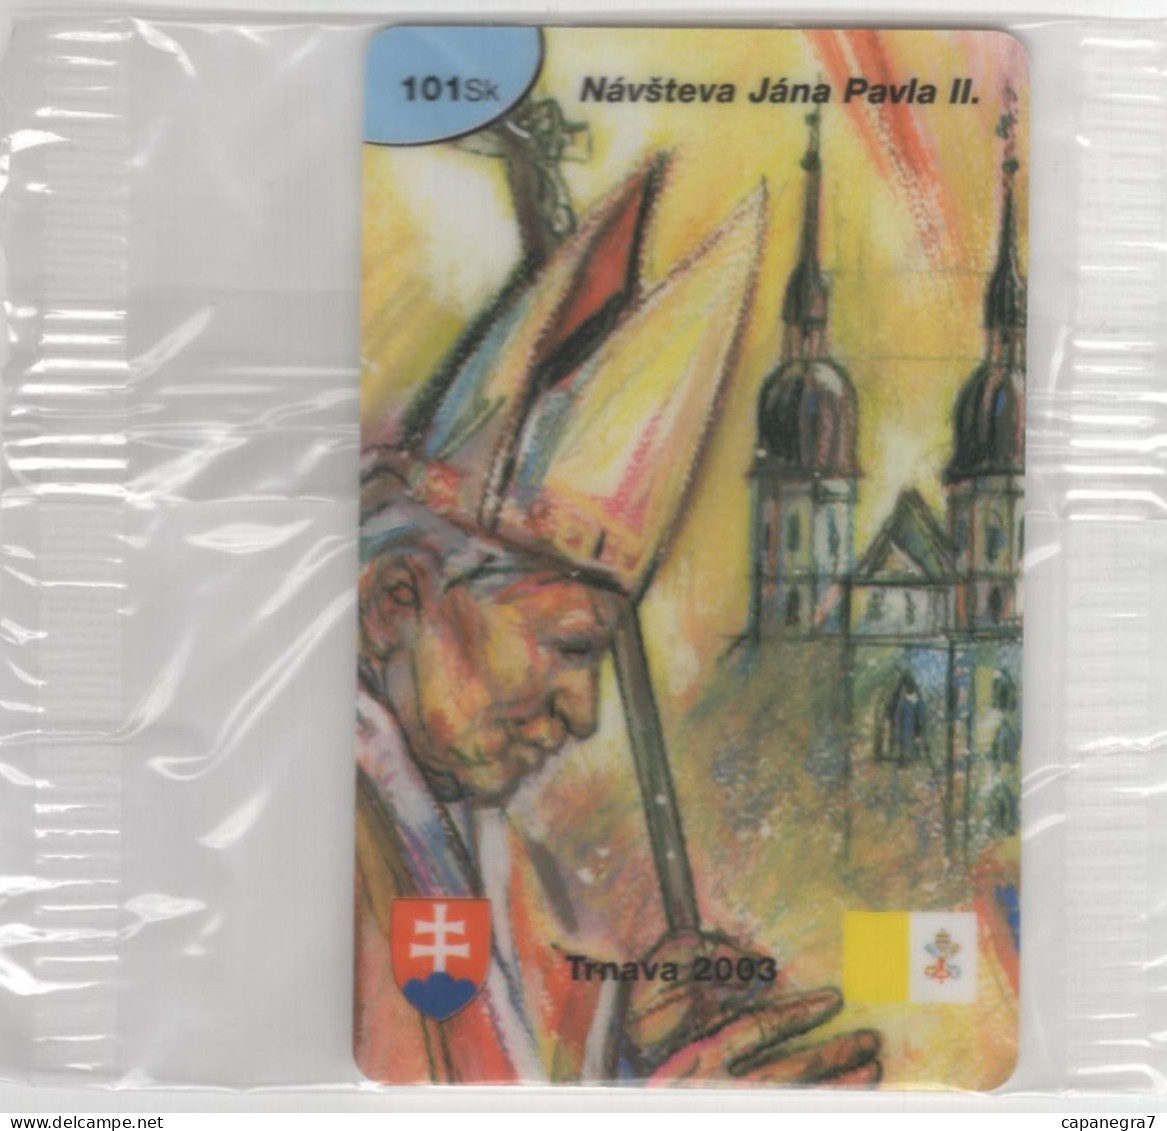 Pope John Paulu II. - Trnava 2003, Prepaid Calling Card, 101 Sk., 1.250 Pc., GlobalIPhone, Slovakia, Mint, Packed - Slovaquie